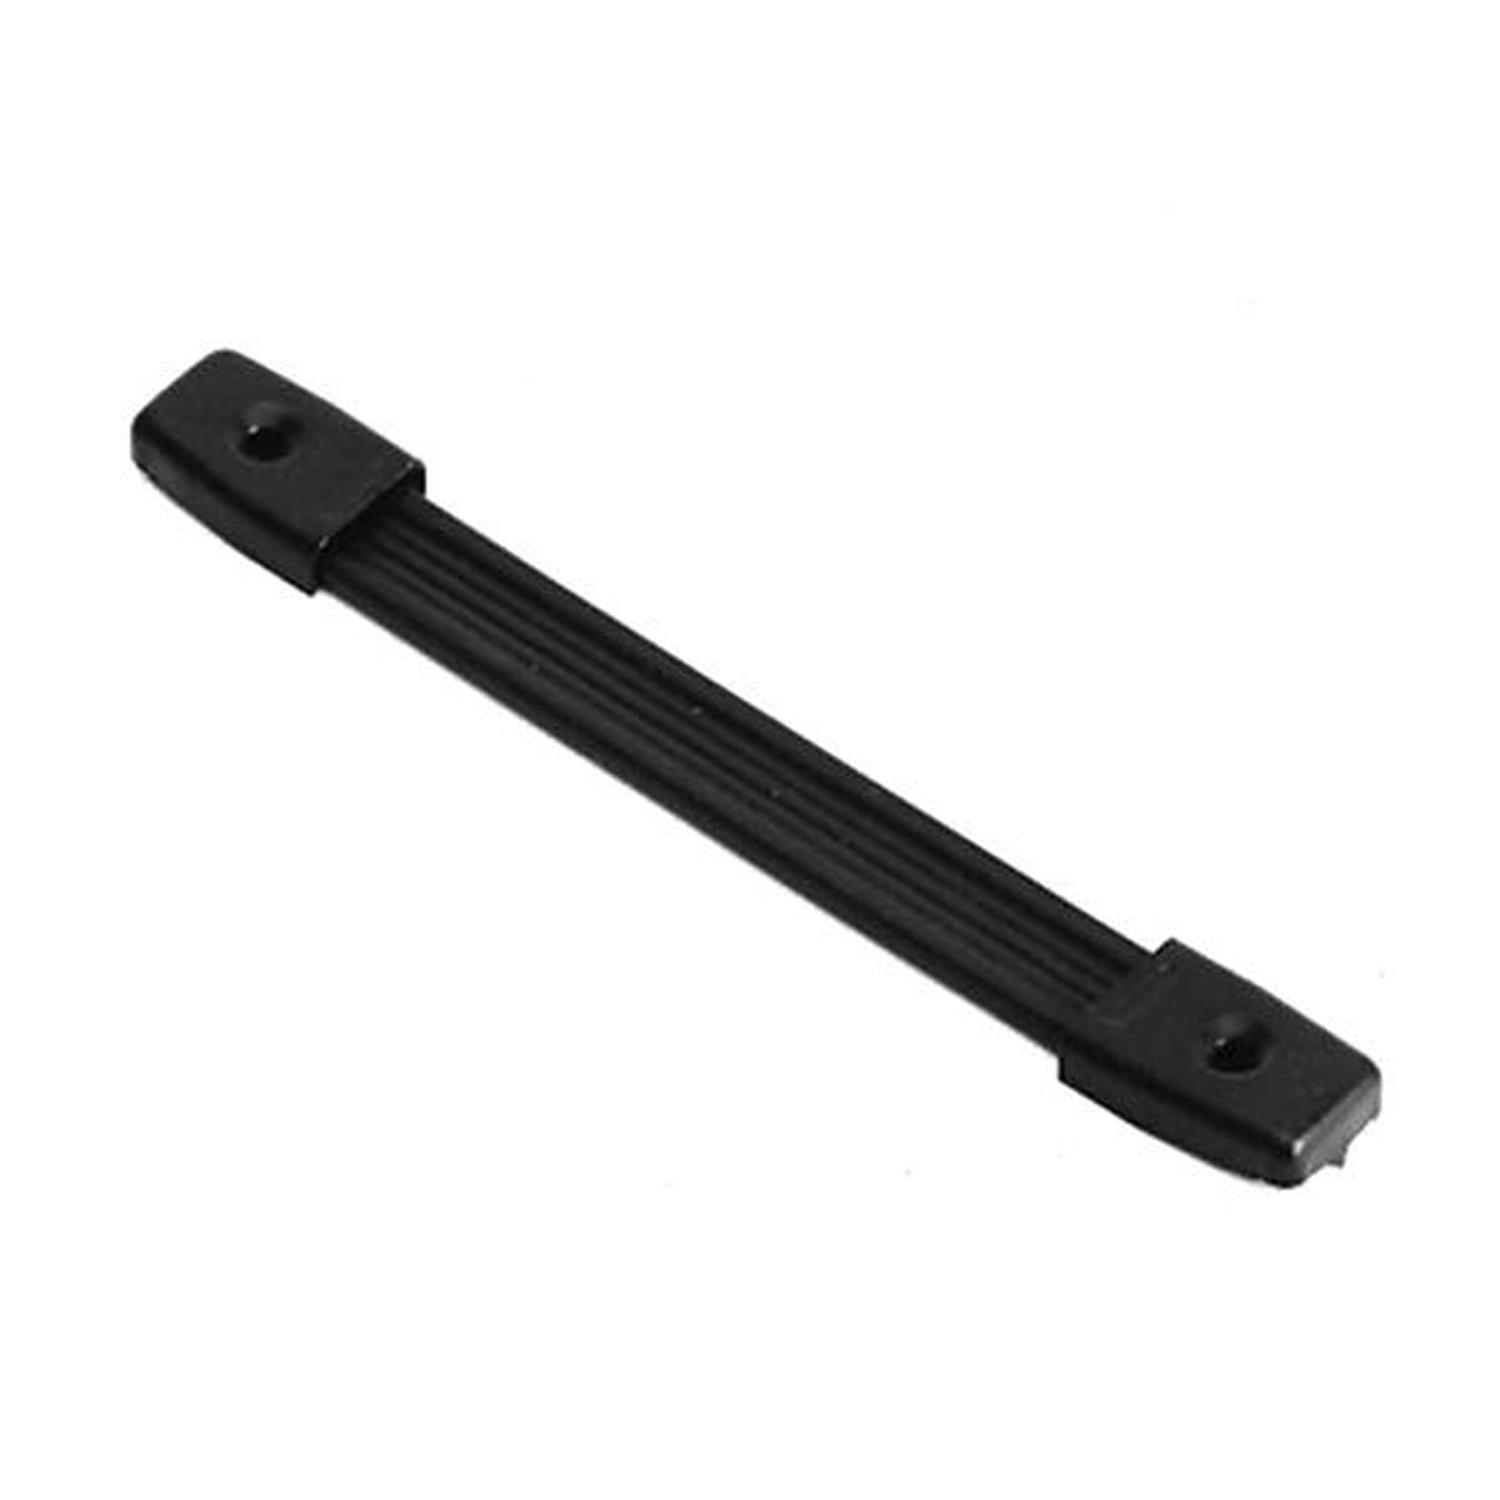 Penn Elcom Black Plastic Strap Handle with Black Steel End Caps - DY Pro Audio